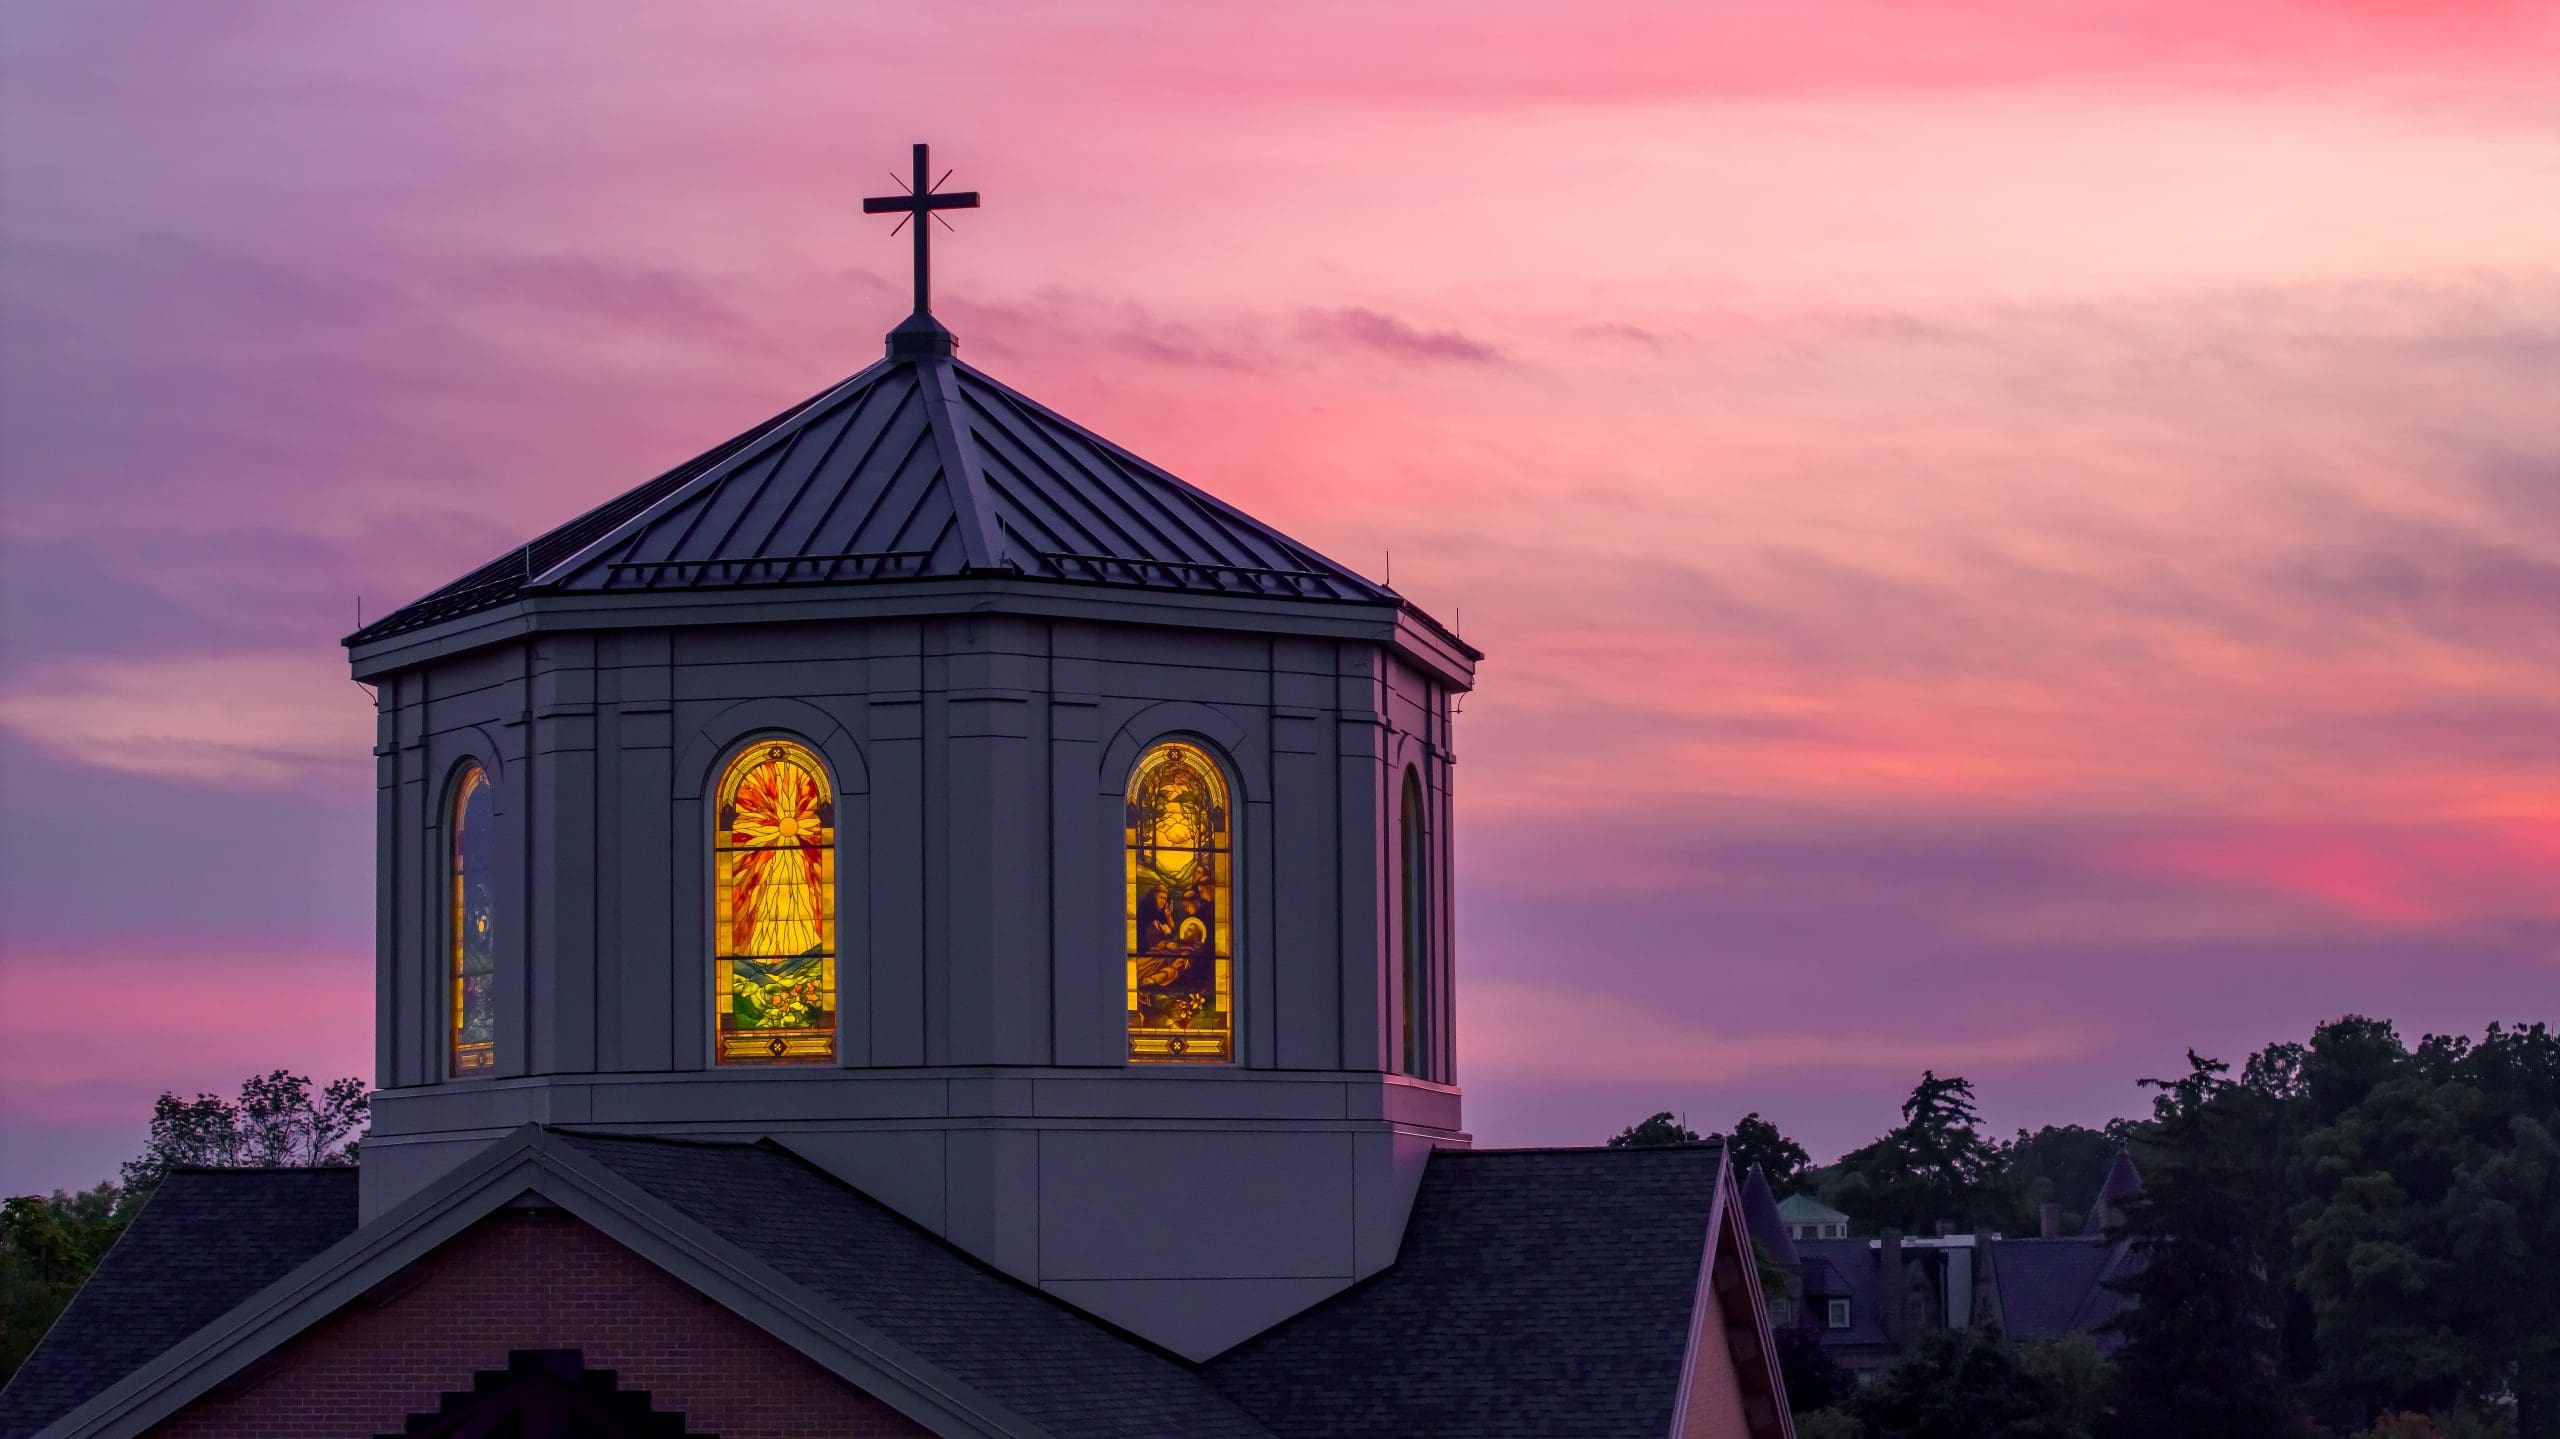 Campus Chapel at sunset